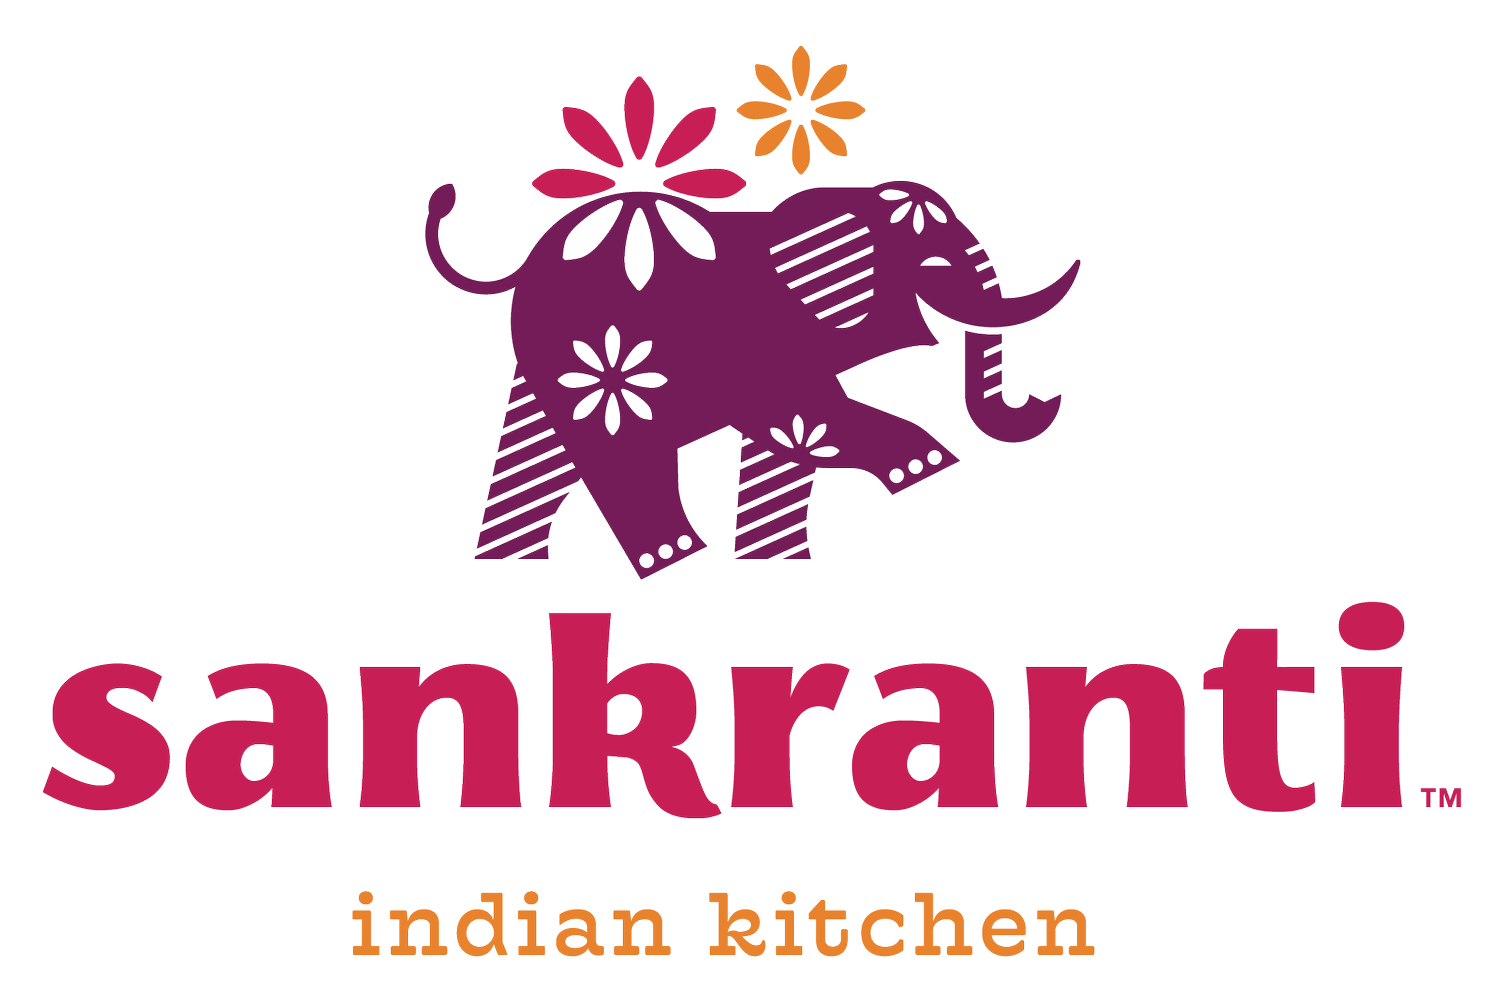 Sankranti Indian Kitchen